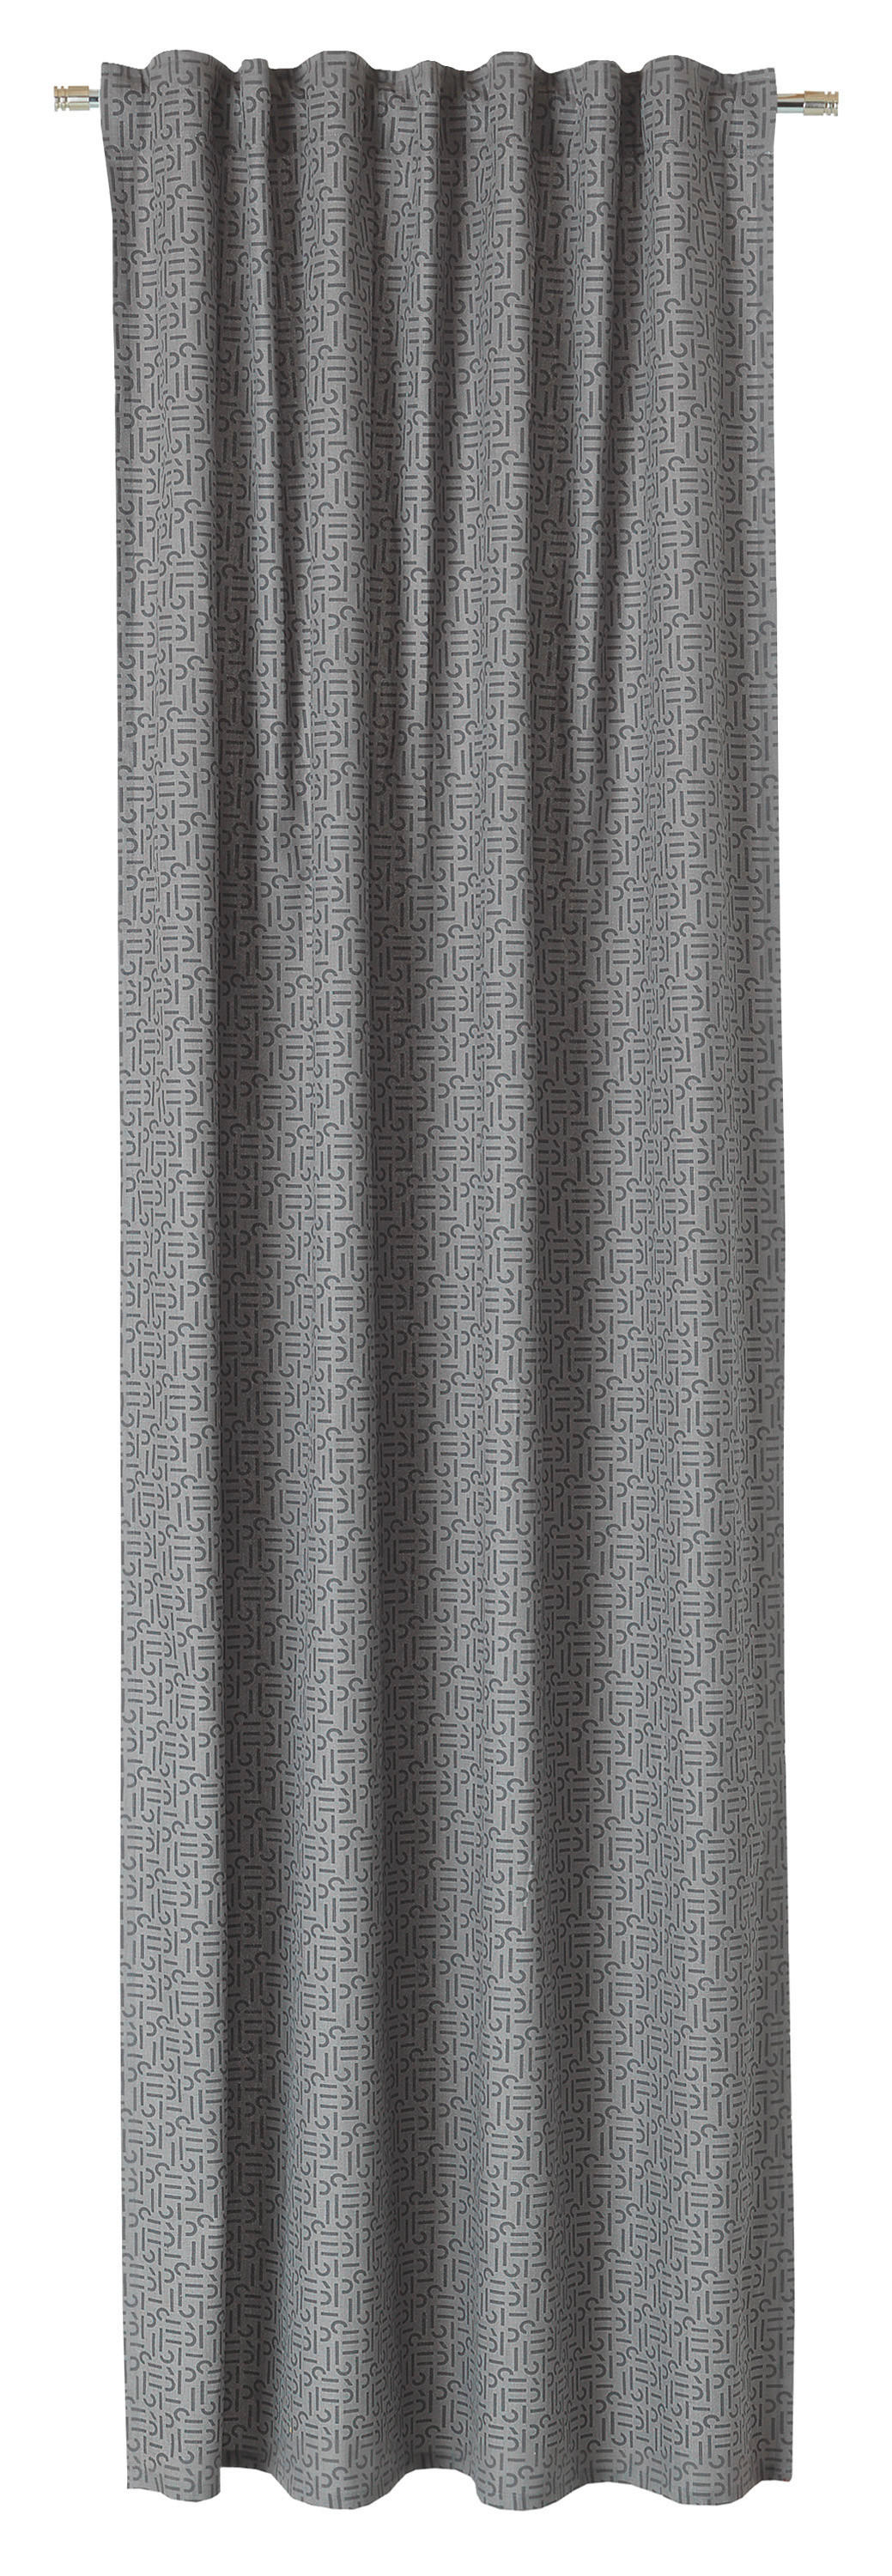 FERTIGVORHANG E-Scatter blickdicht 130/250 cm   - Anthrazit, Design, Textil (130/250cm) - Esprit